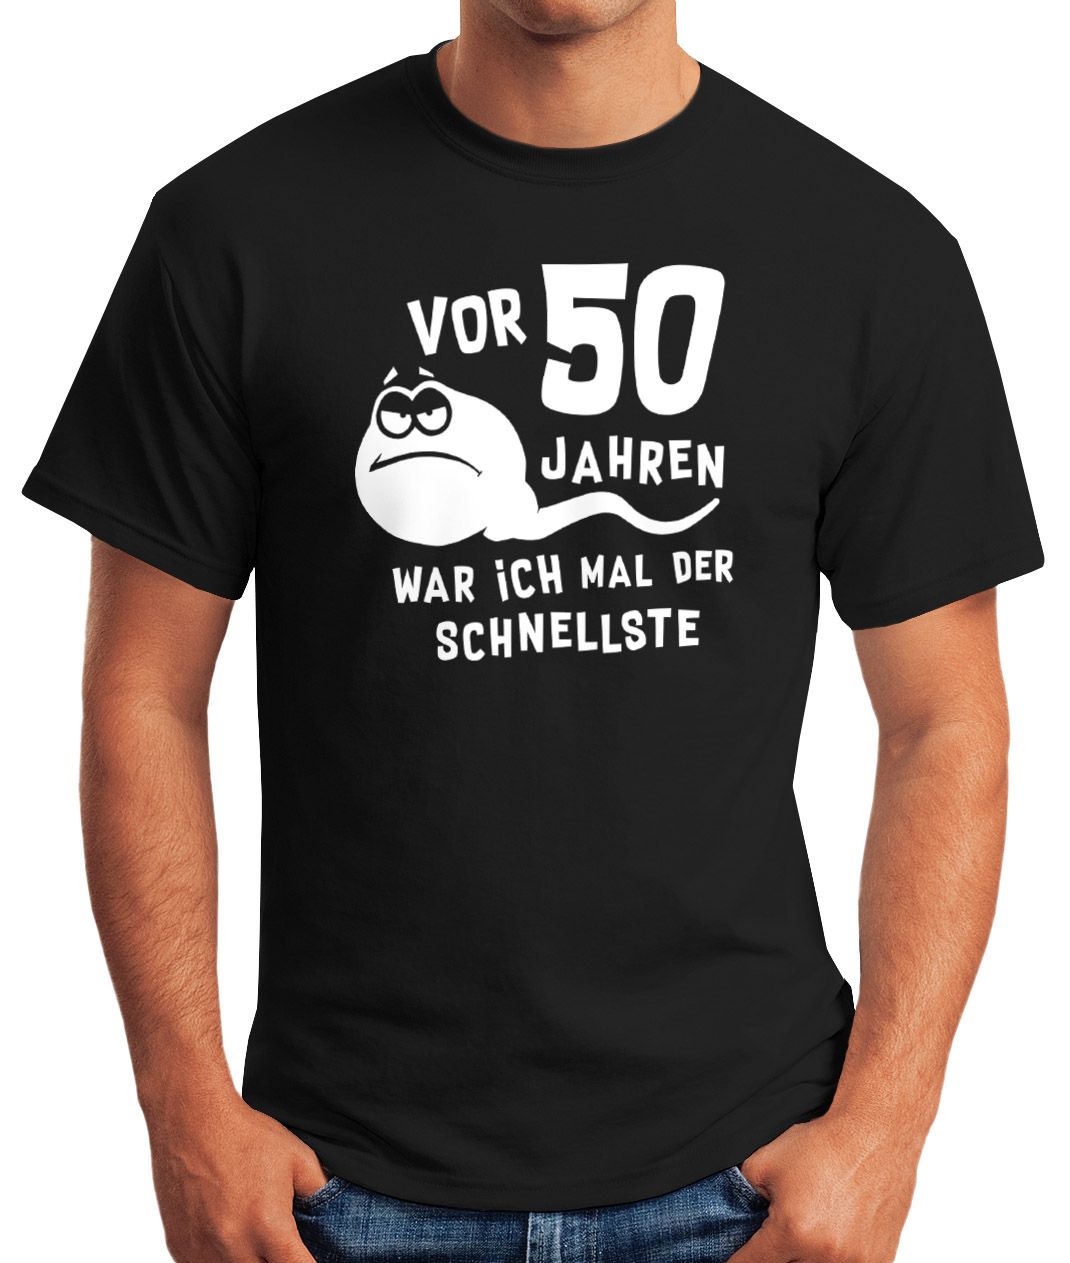 36+ T shirt spruch mann ideas